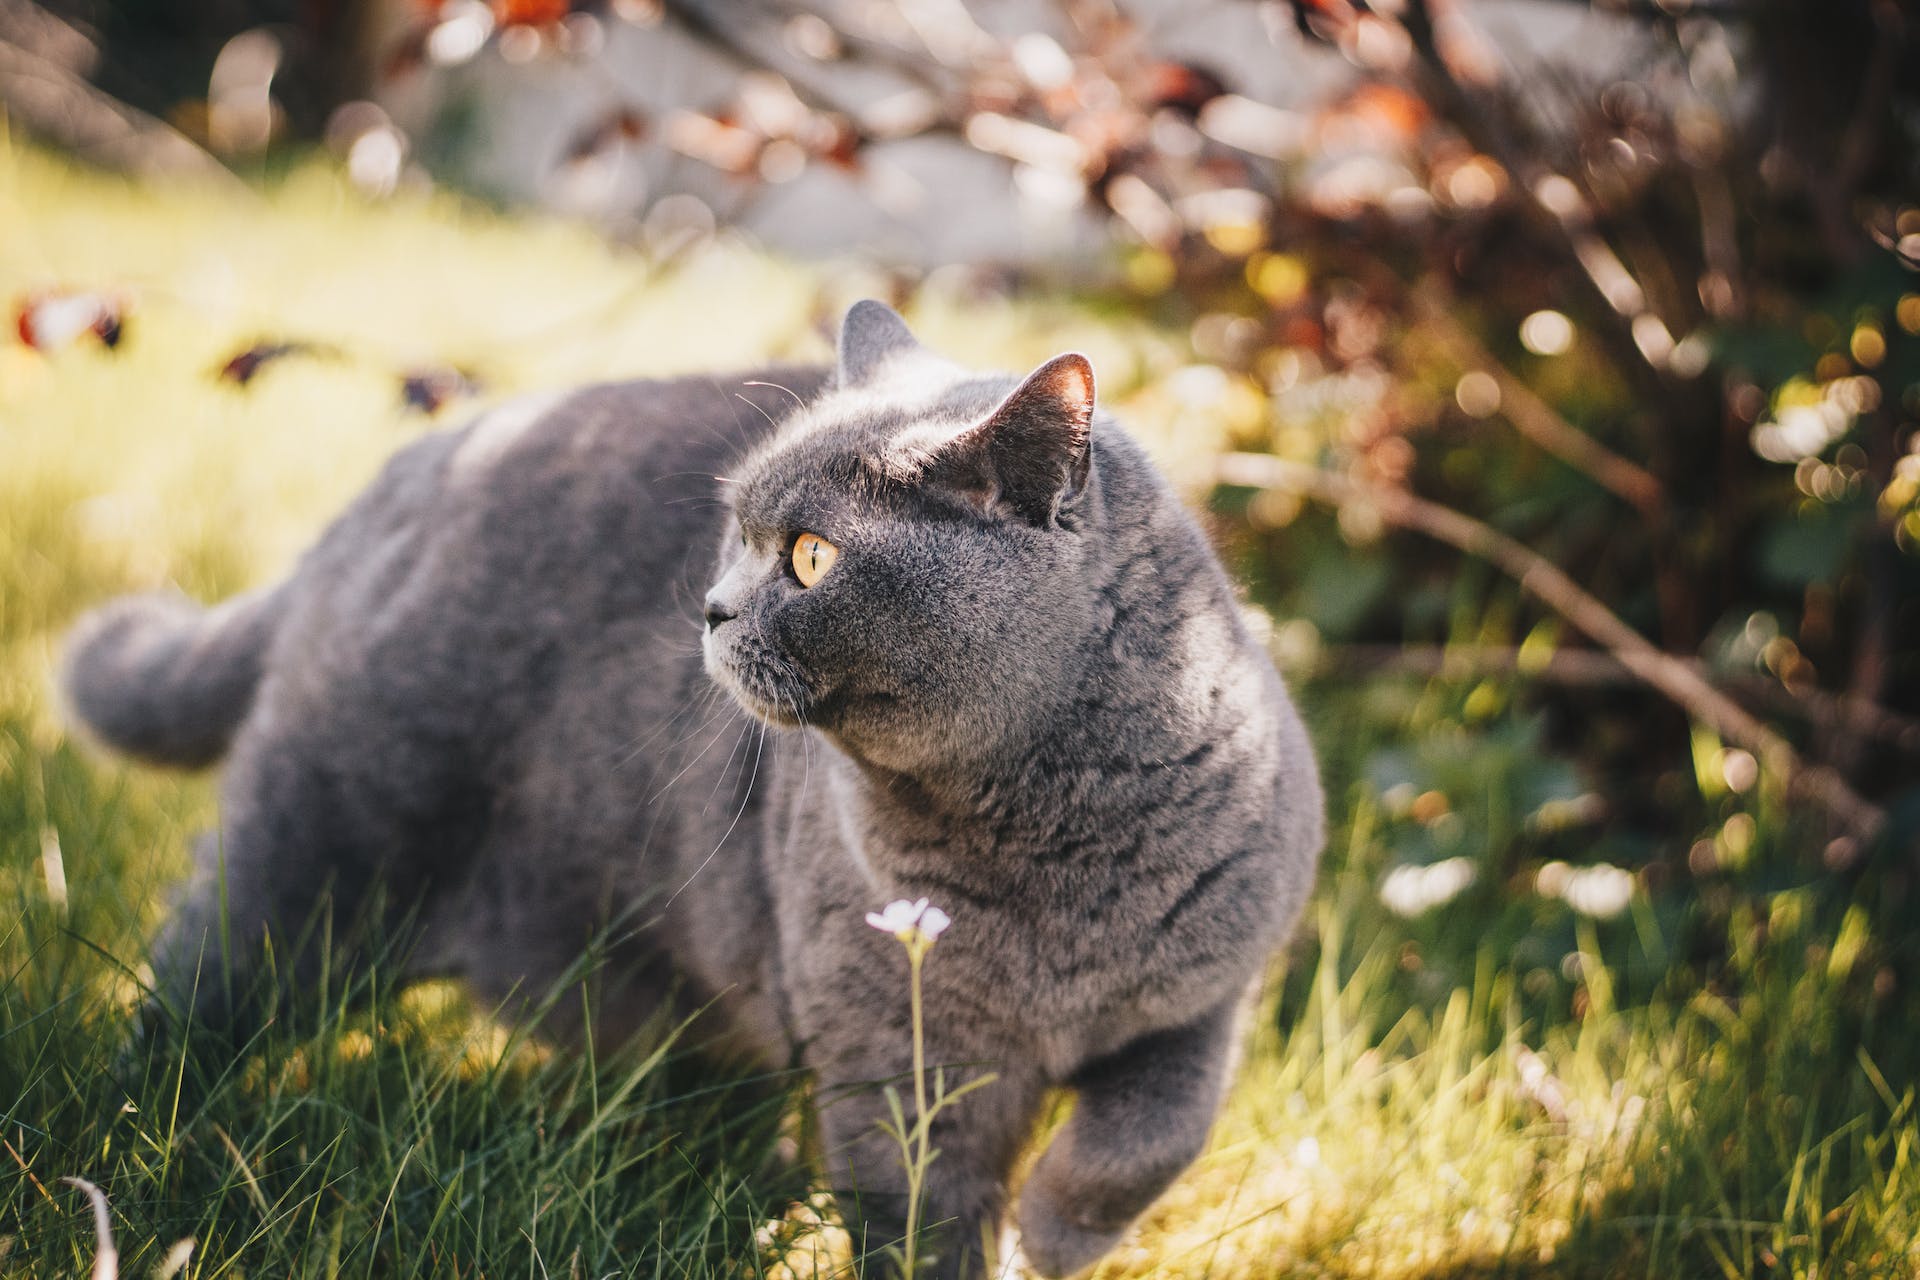 A British Shorthair cat walking around a grassy lawn